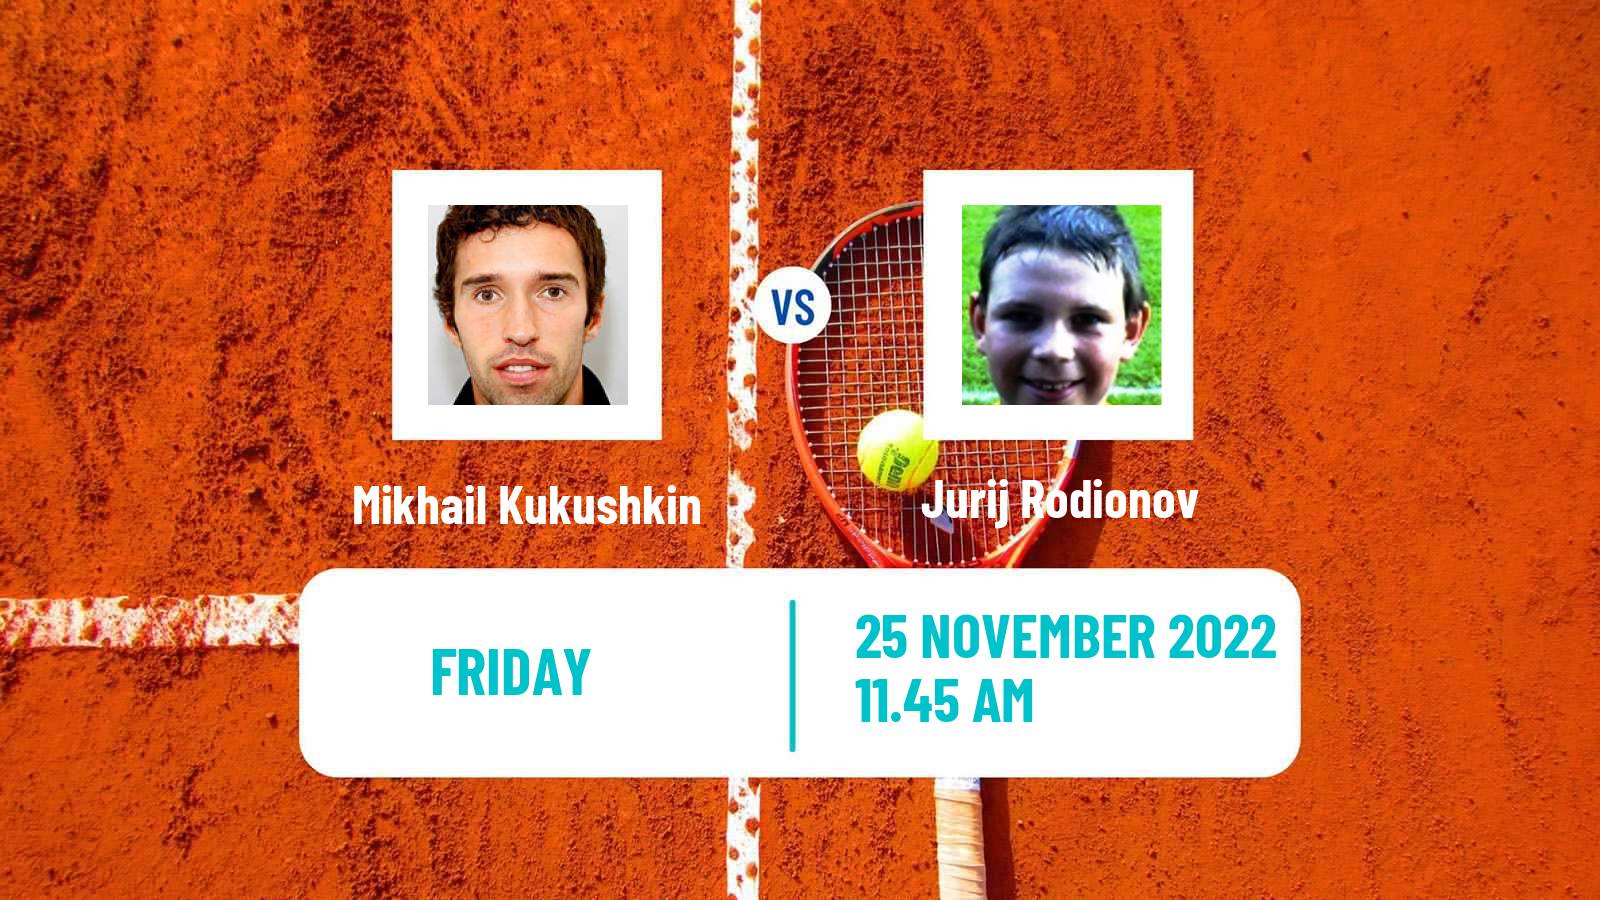 Tennis ATP Challenger Mikhail Kukushkin - Jurij Rodionov